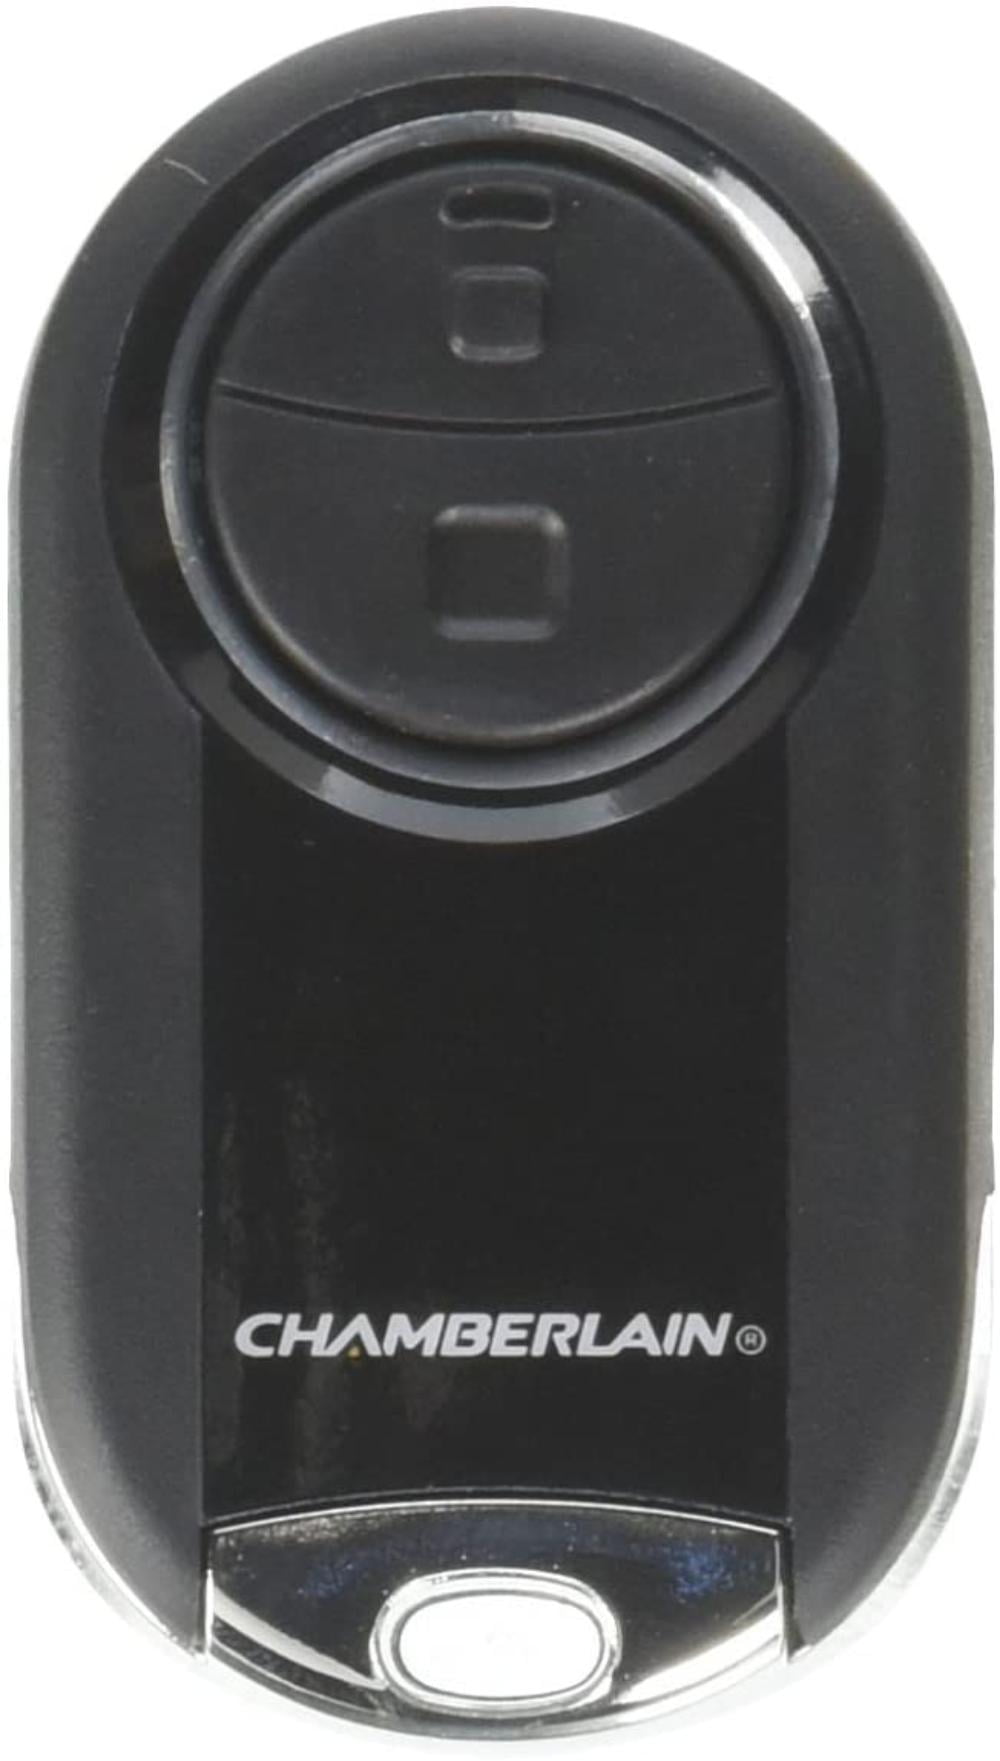 Chamberlain Group MC100P2 Universal Garage Door Opener